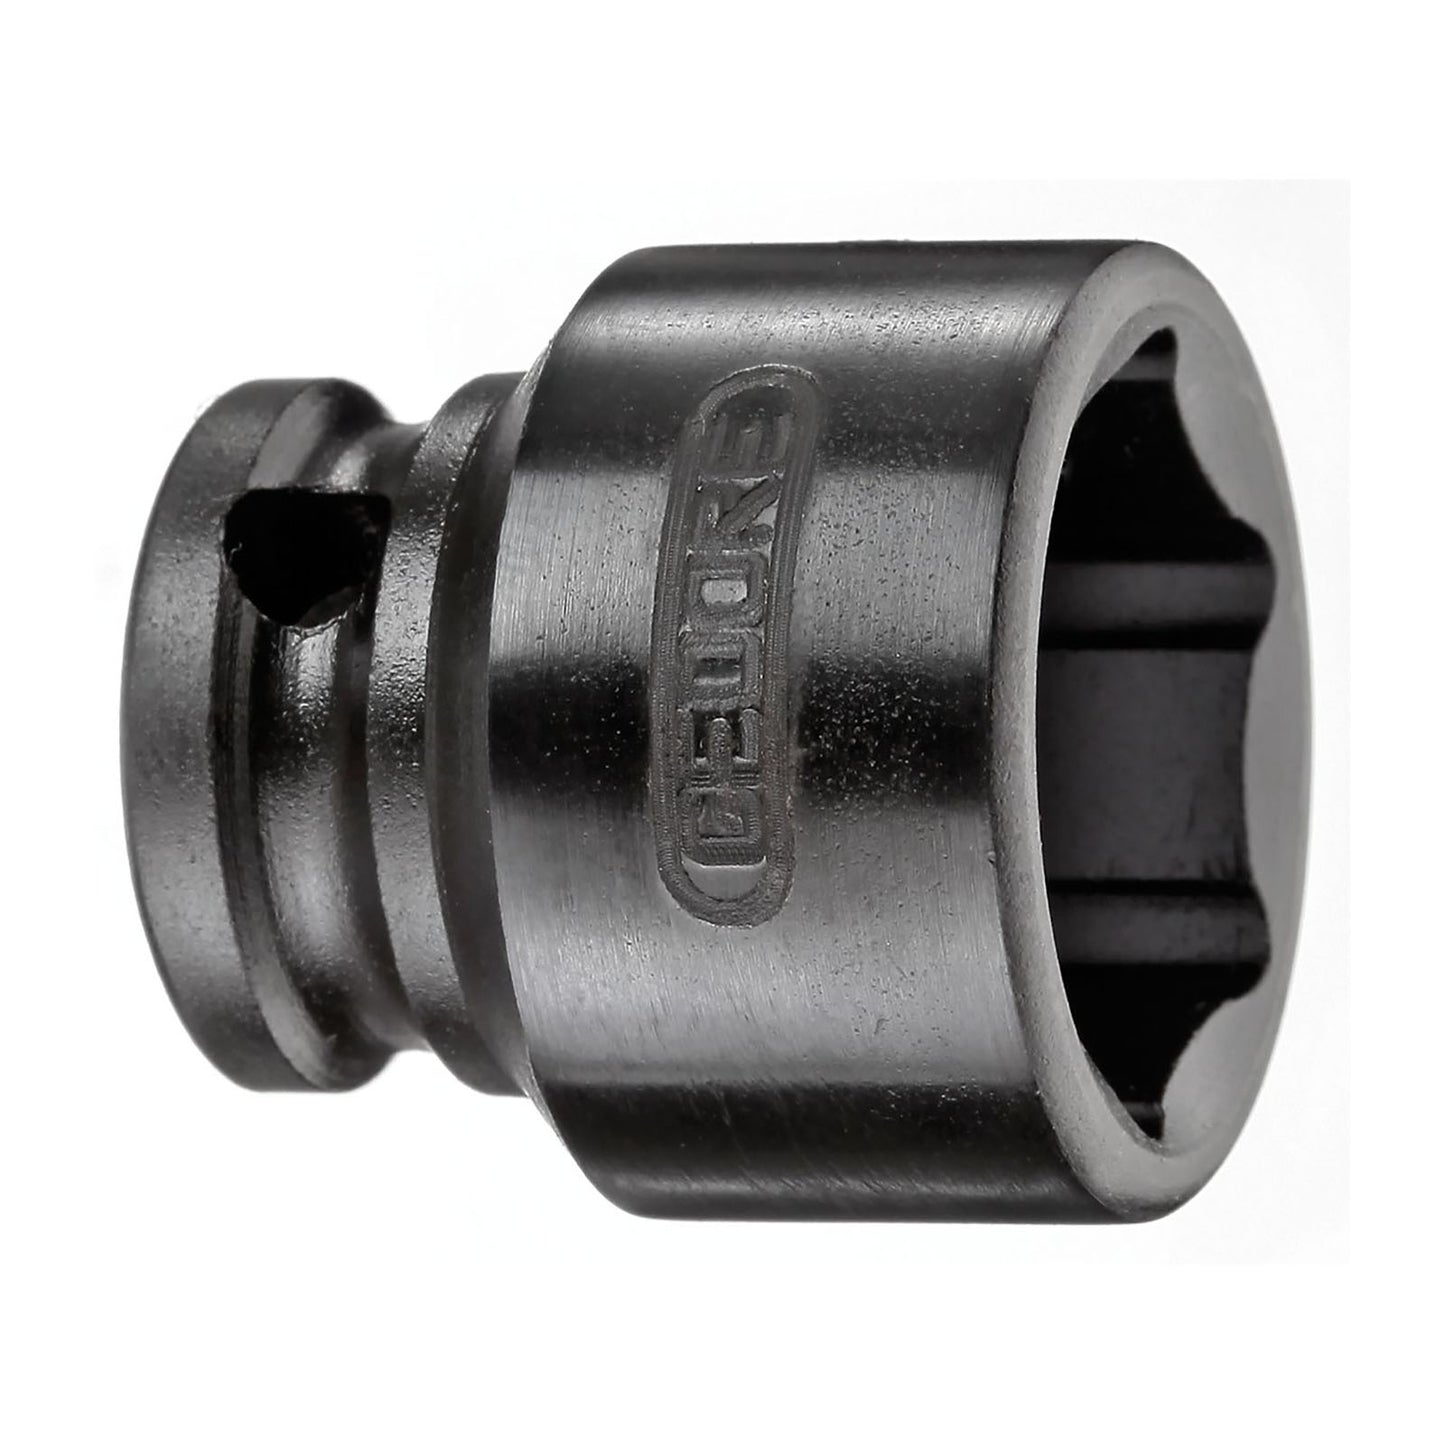 GEDORE K 30 23 - Hex Impact Socket 3/8", 23 mm (6252990)